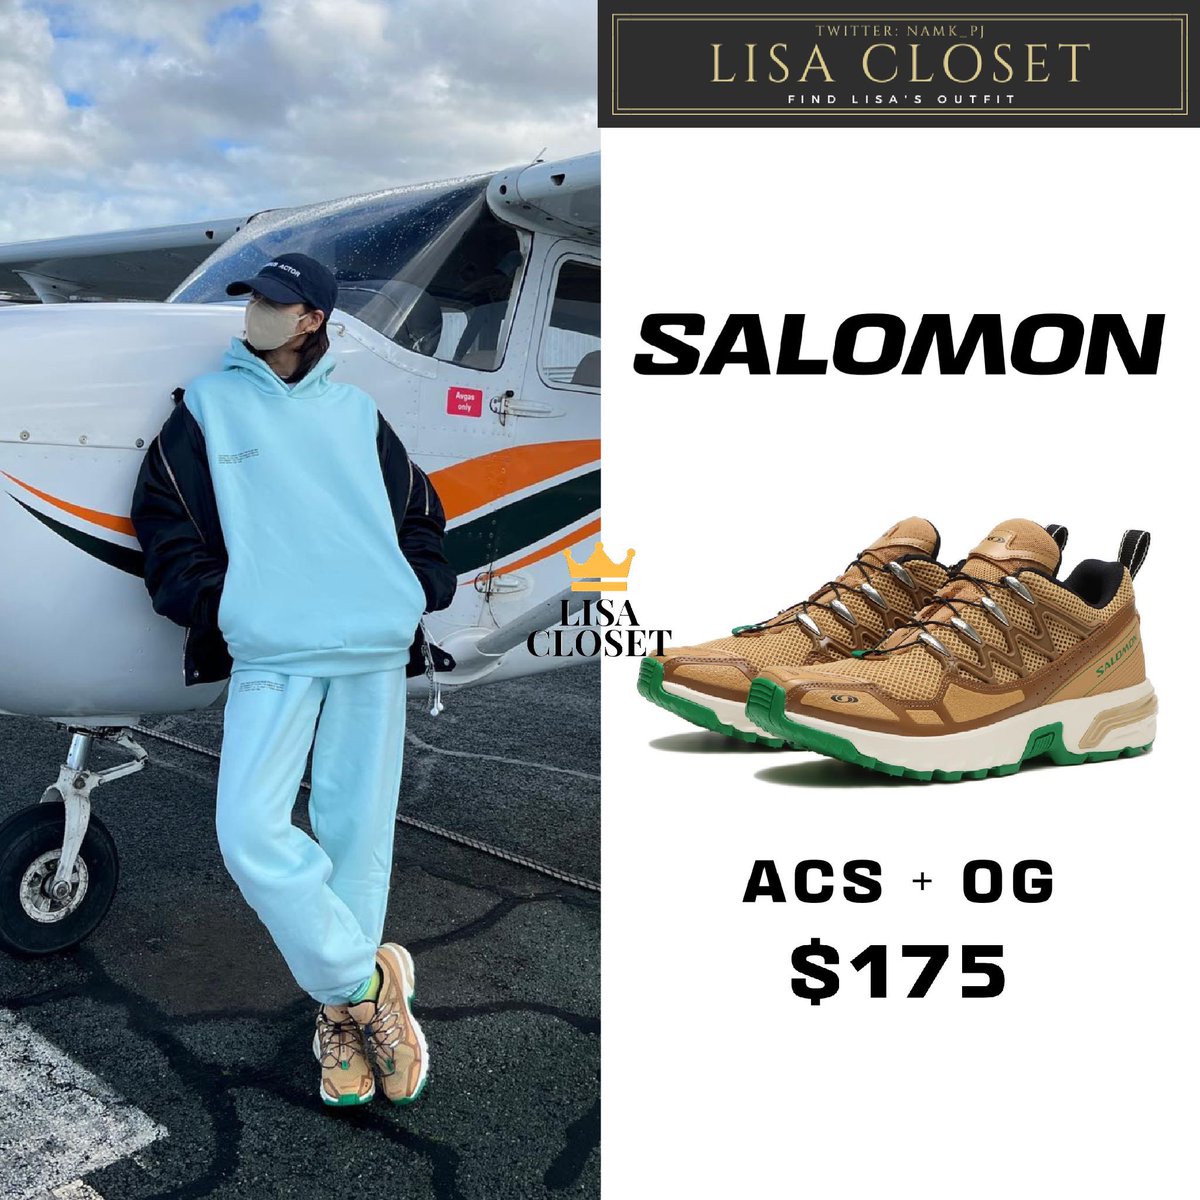 [230614 IG: lalalalisa_m] 🚁🐹✨
Jacket 102,500฿ ($2,950)
Hoodie 5,700฿ ($165)
Pants 5,400฿ ($155)
Sneaker 6,100฿ ($175)
@ygofficialblink @BLACKPINK 
#LISA_CLOSET
#LALISA #라리사
#LISA #BLACKPINK
#리사 #블랙핑크